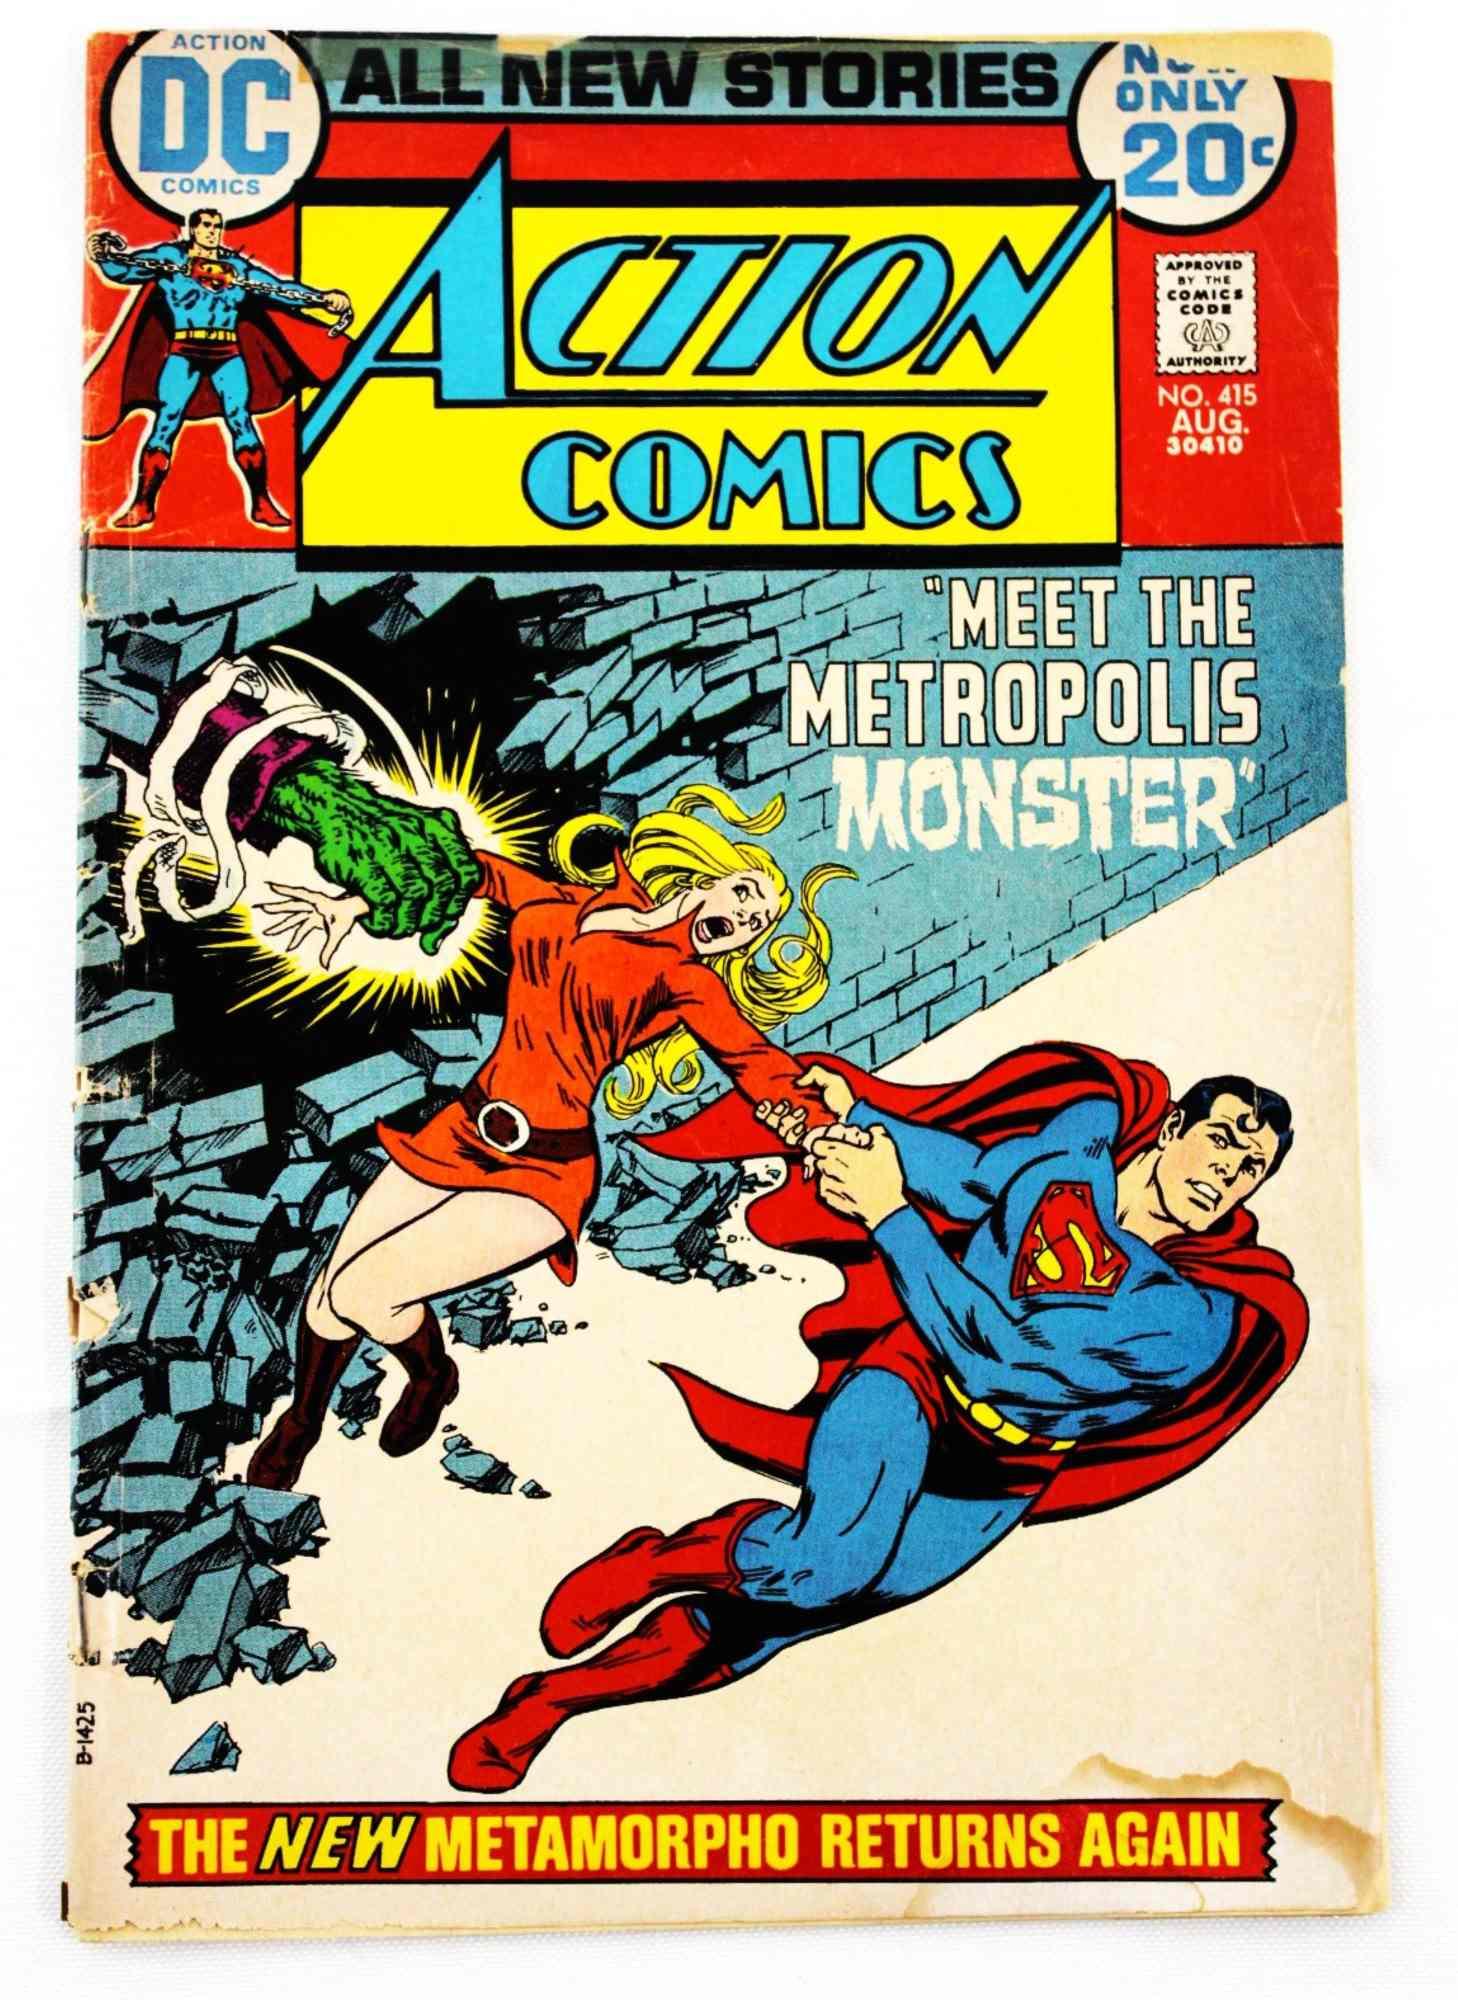 TWO DC SUPERMAN DC COMIC BOOKS